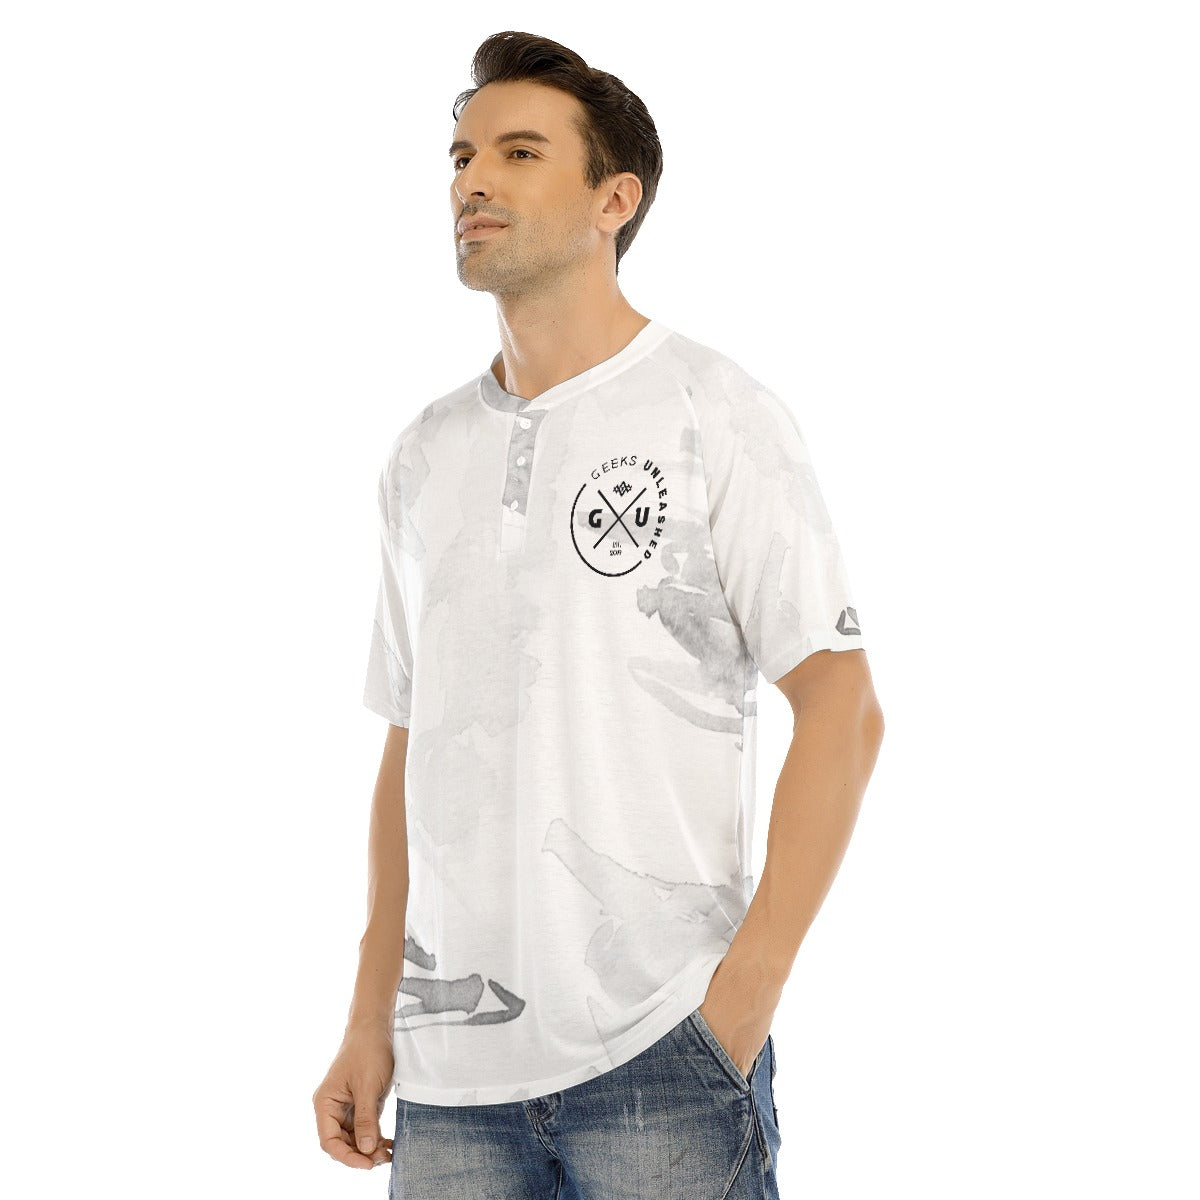 Men's All Over Print Short Sleeve Raglan T-shirt